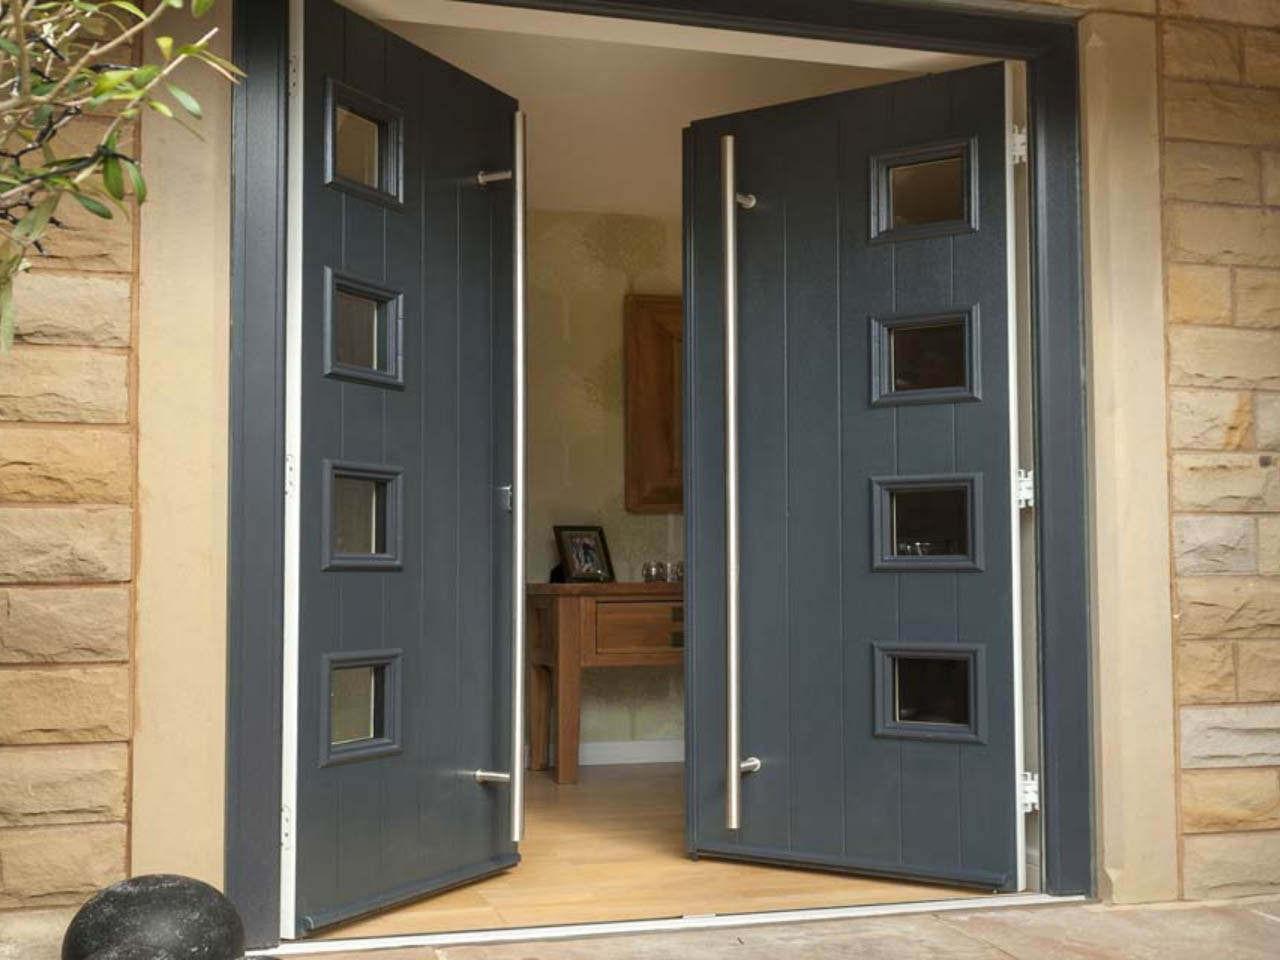 black composite double doors in the open position